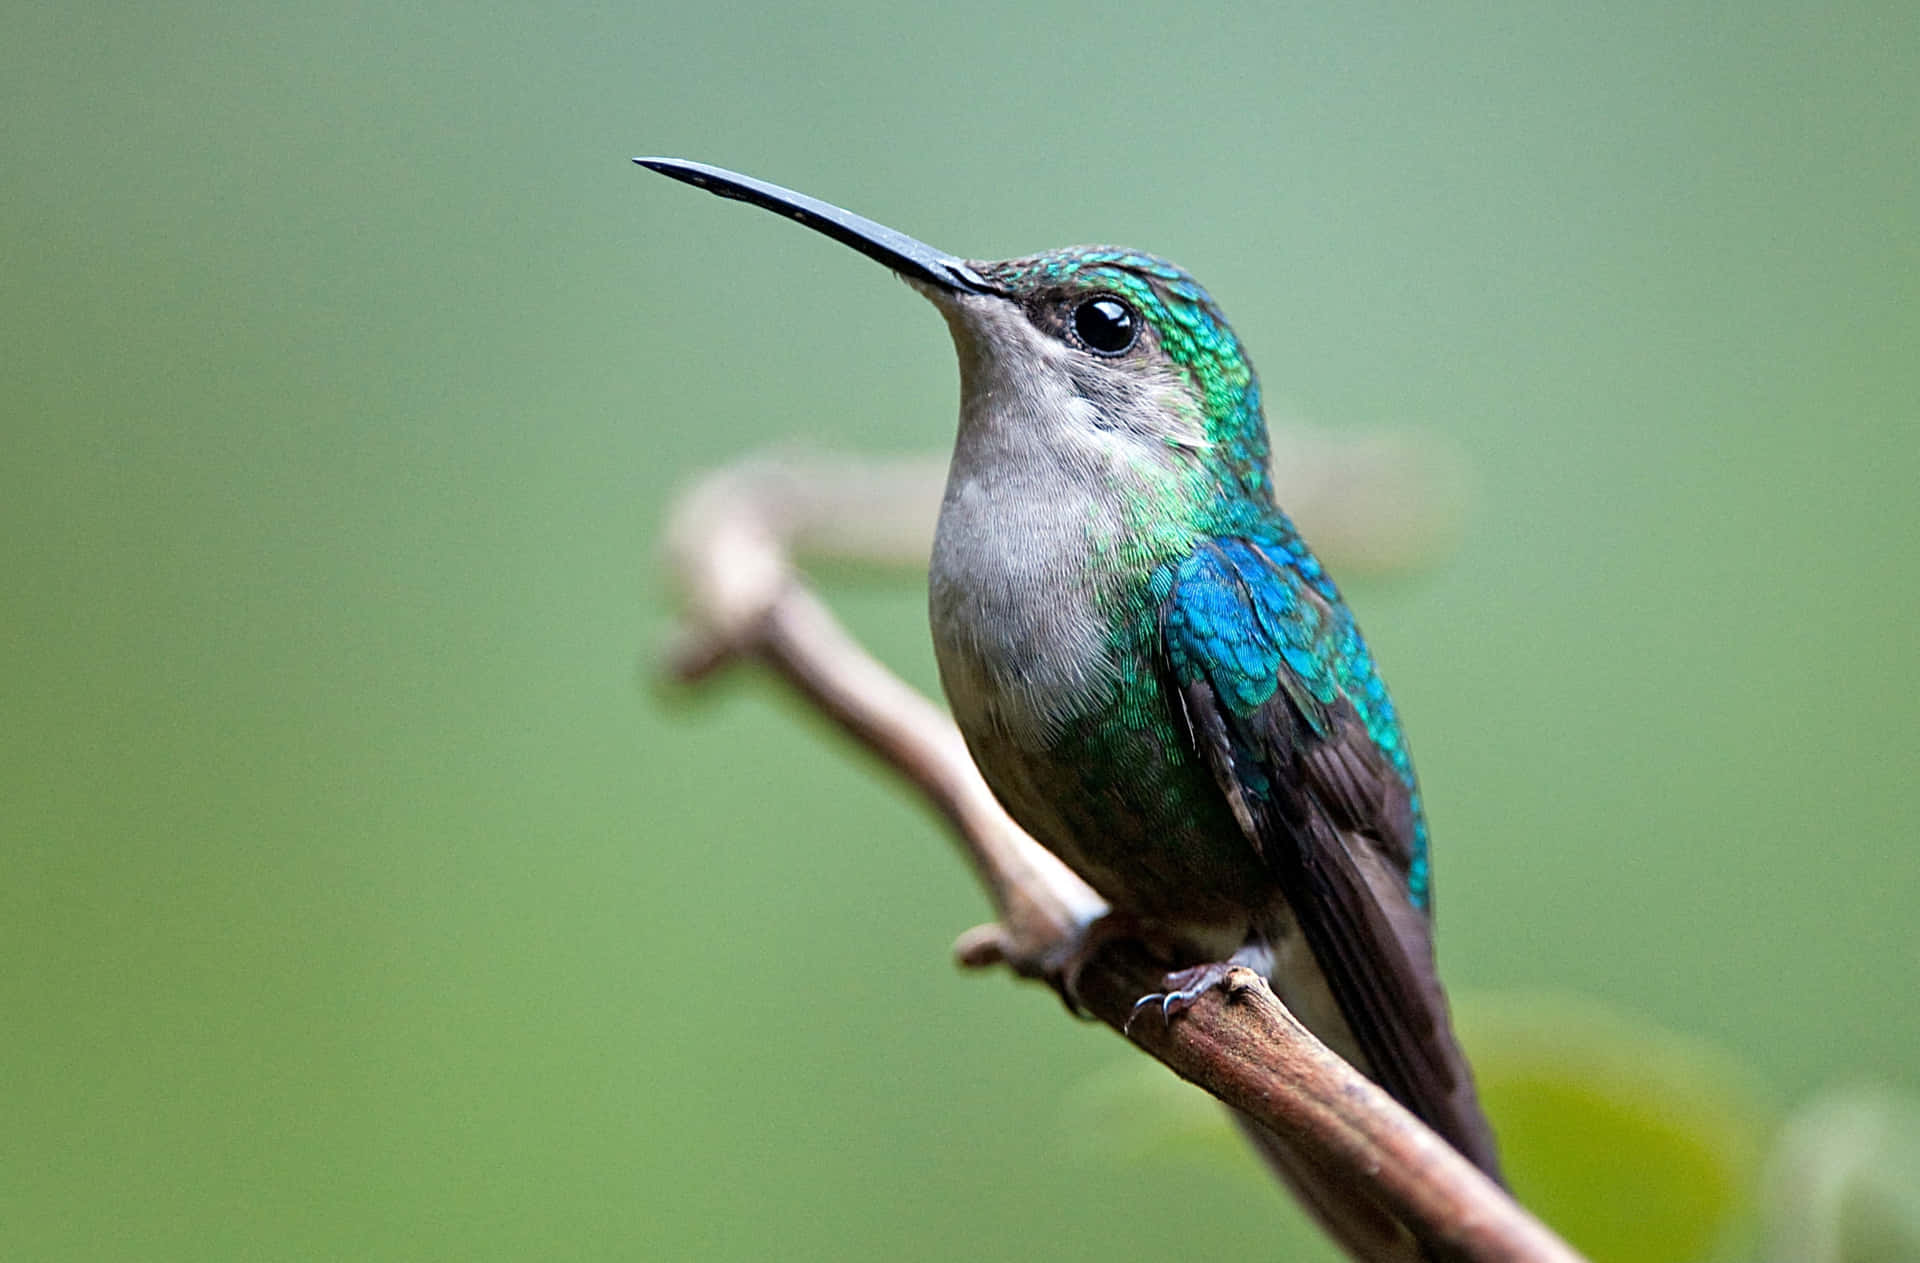 A female hummingbird gracefully hovering in flight